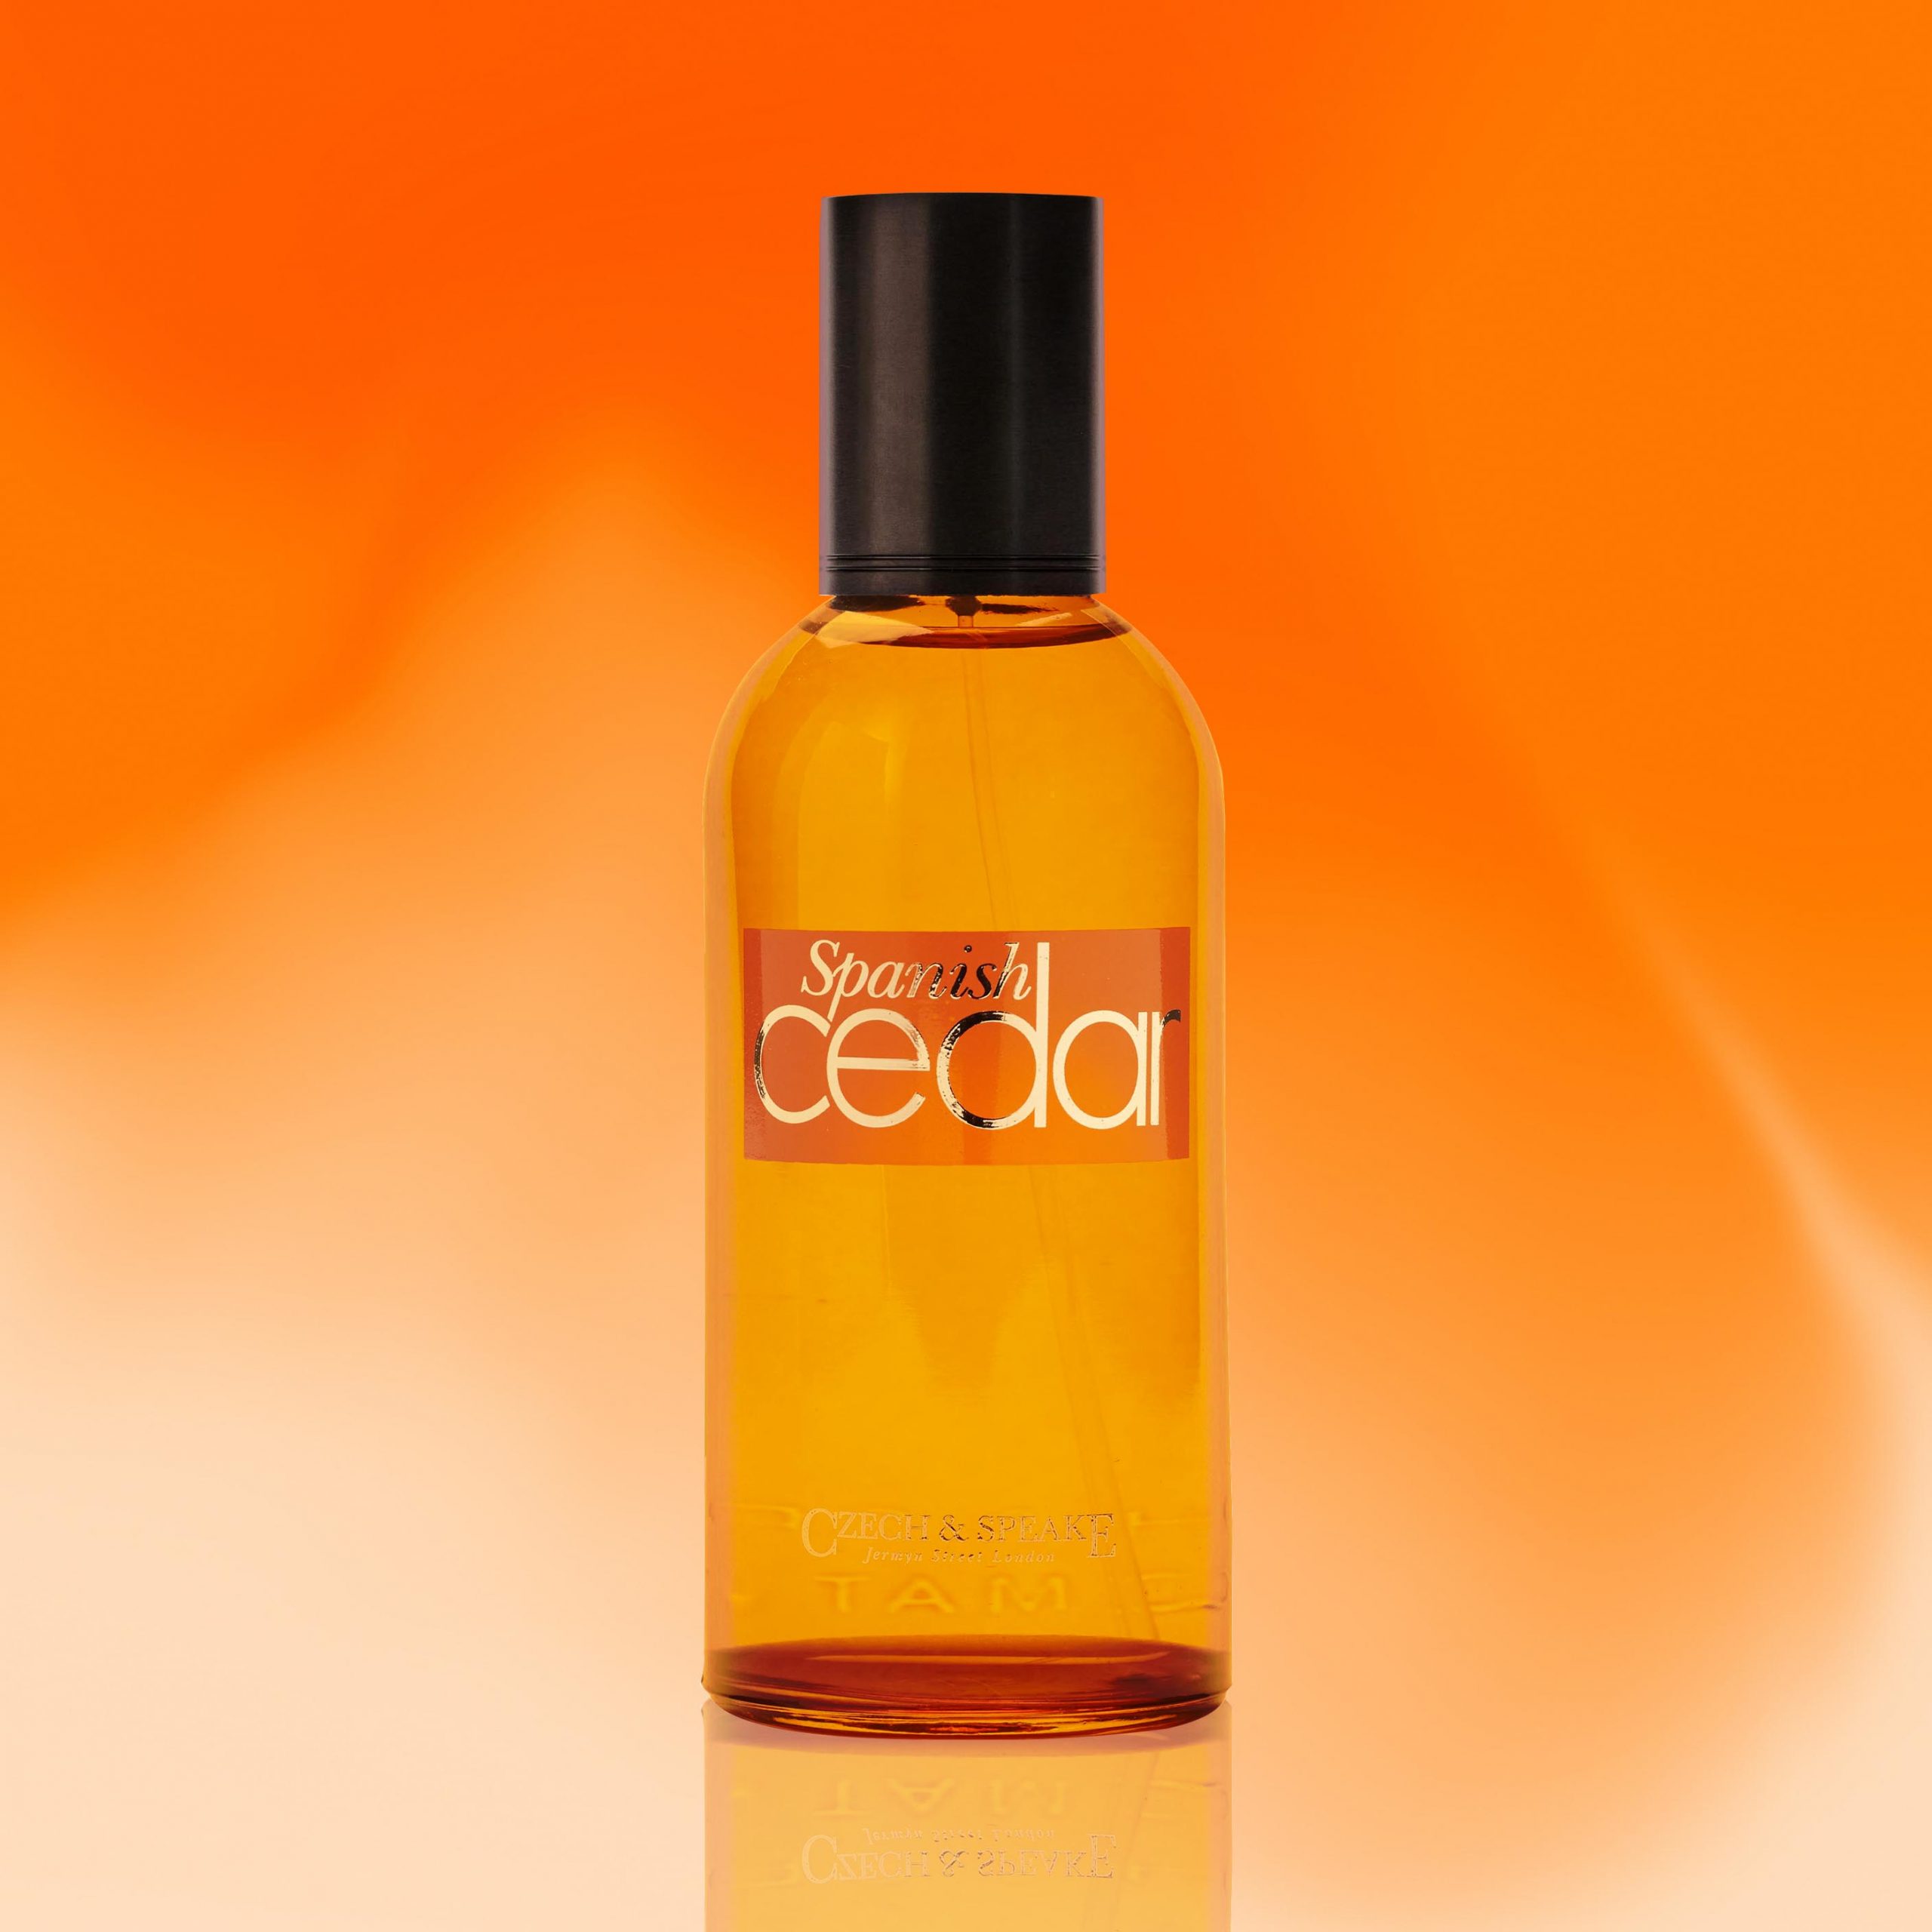 Orange background with amber Spanish Cedar bottle 100ml